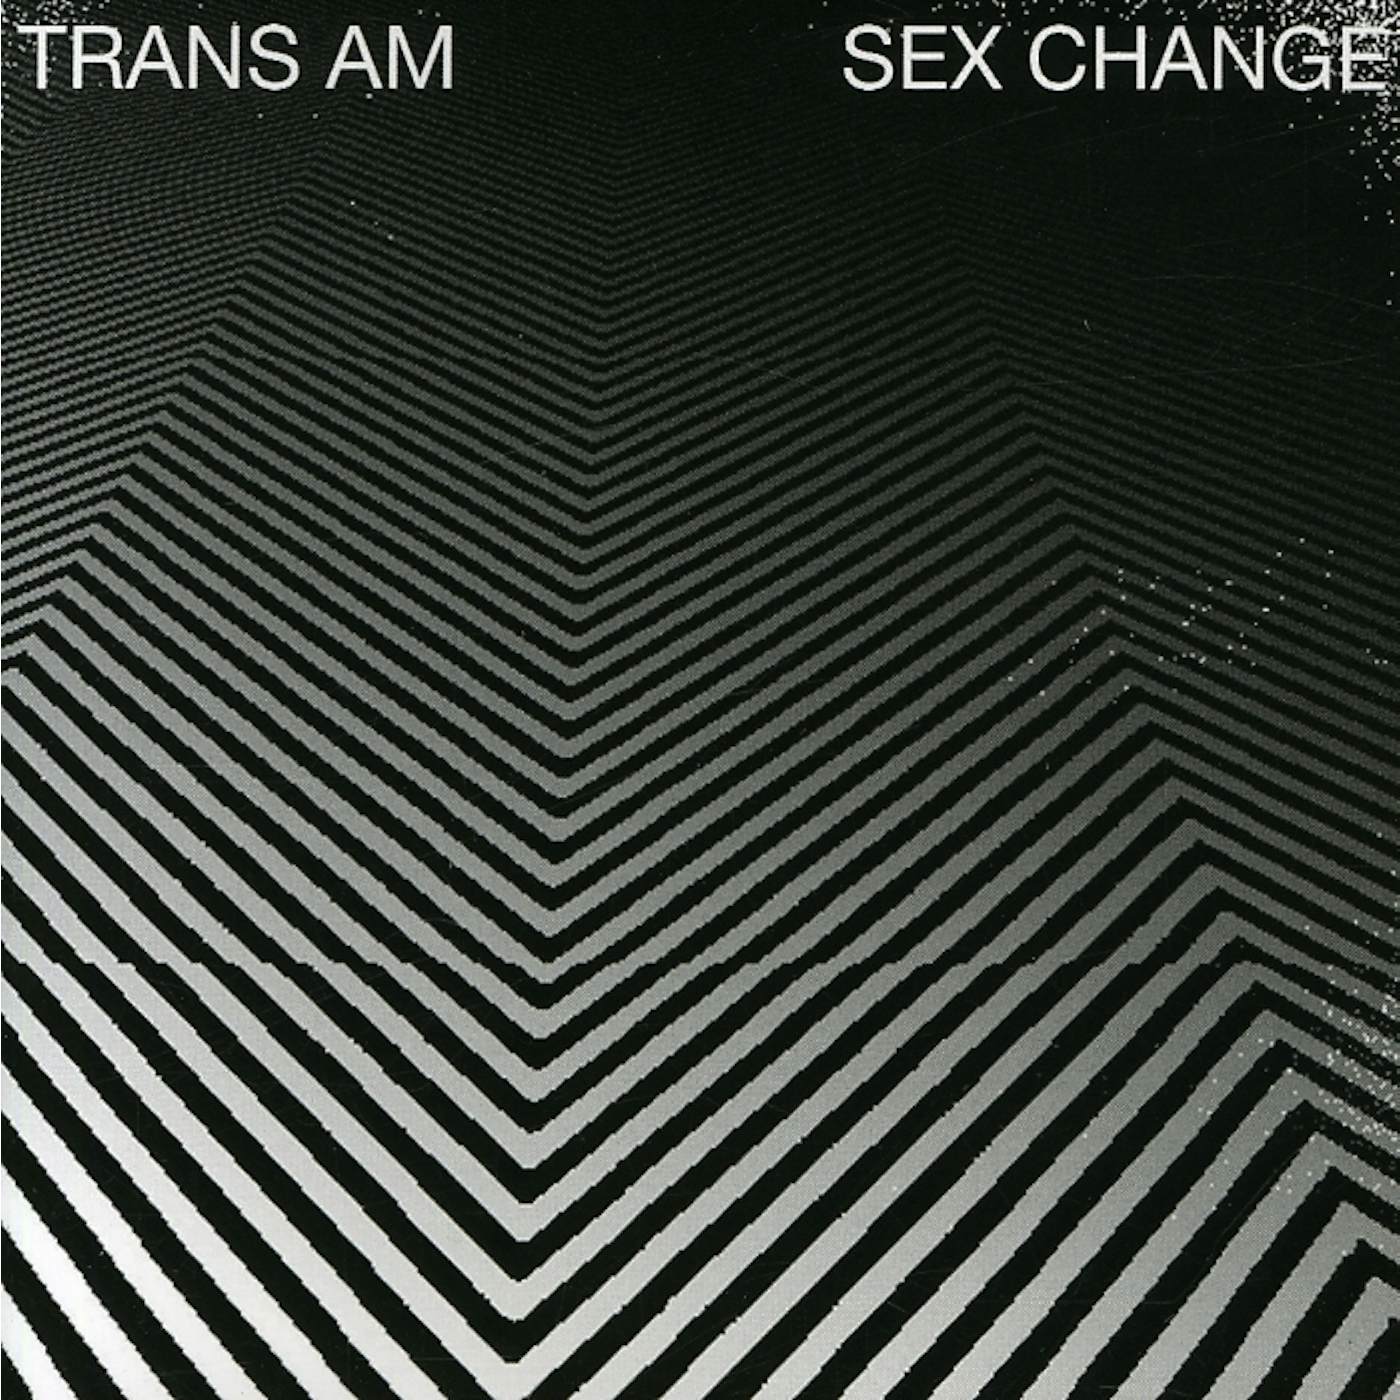 Trans Am SEX CHANGE CD